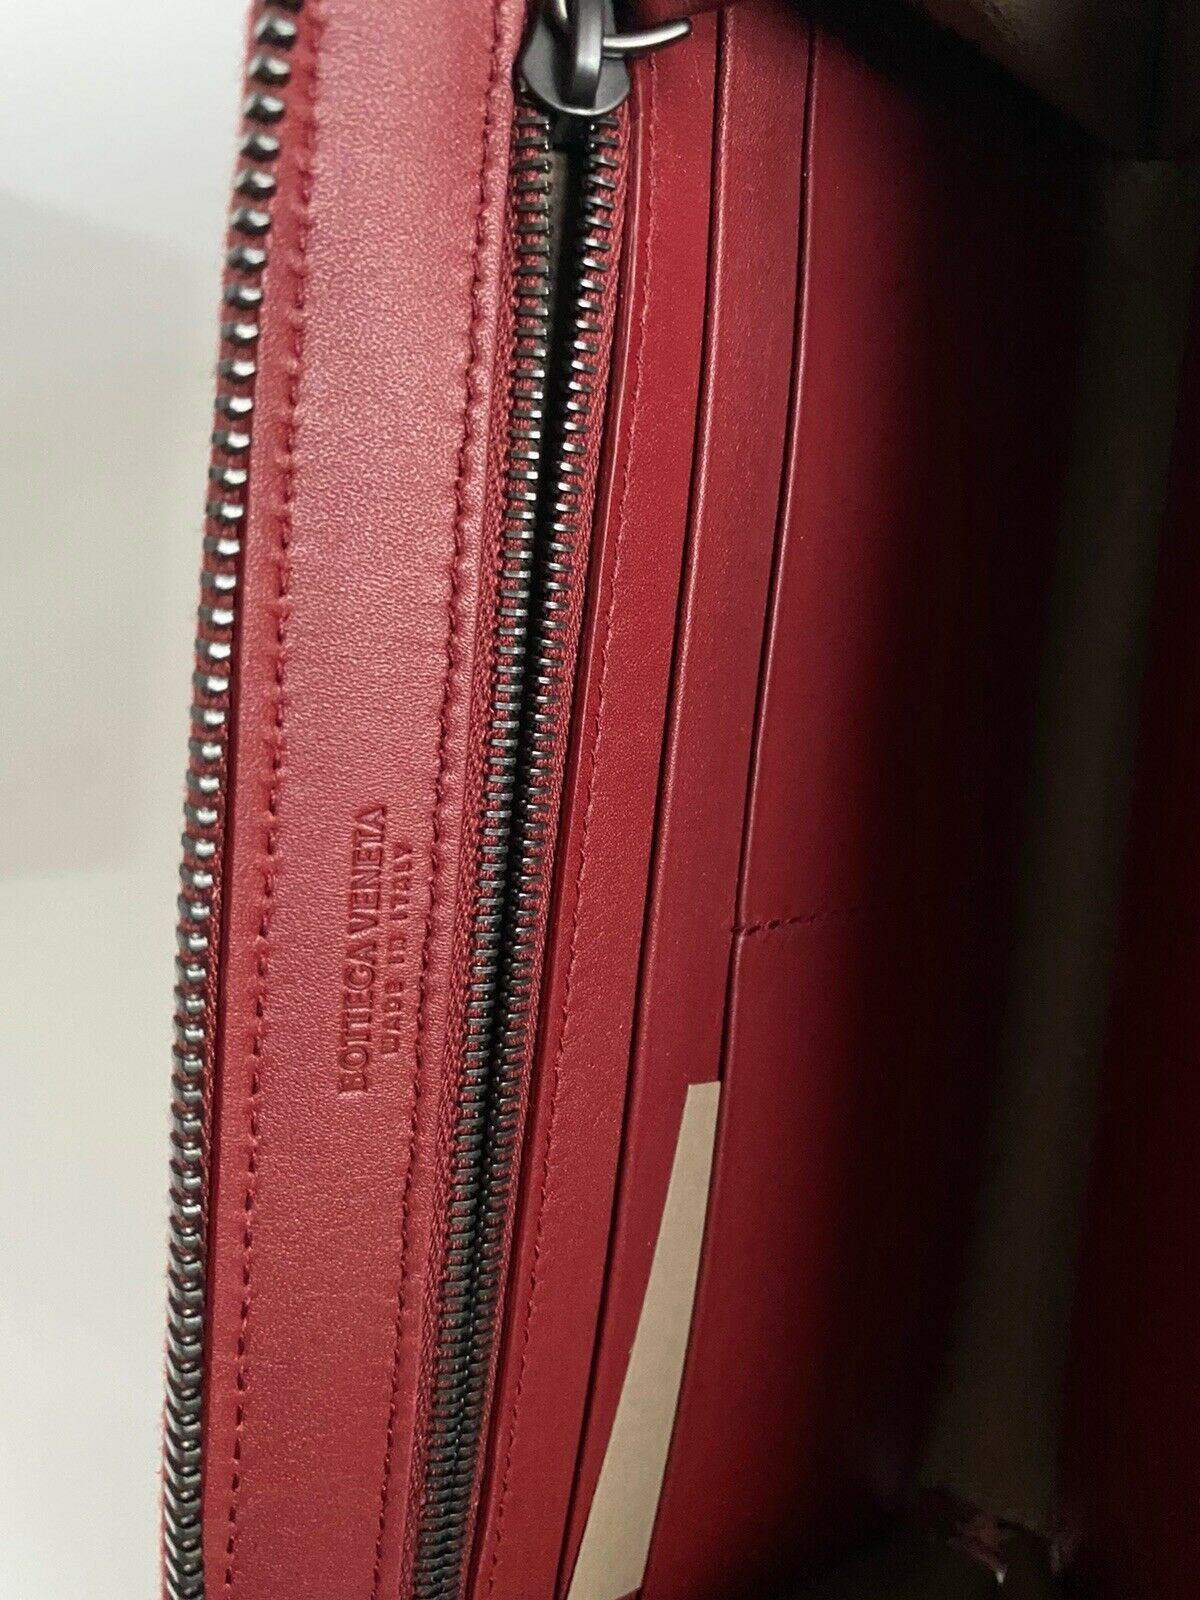 NWT Bottega Veneta Intrecciato Zipper Calf Leather Wallet Baccara Rose 518389